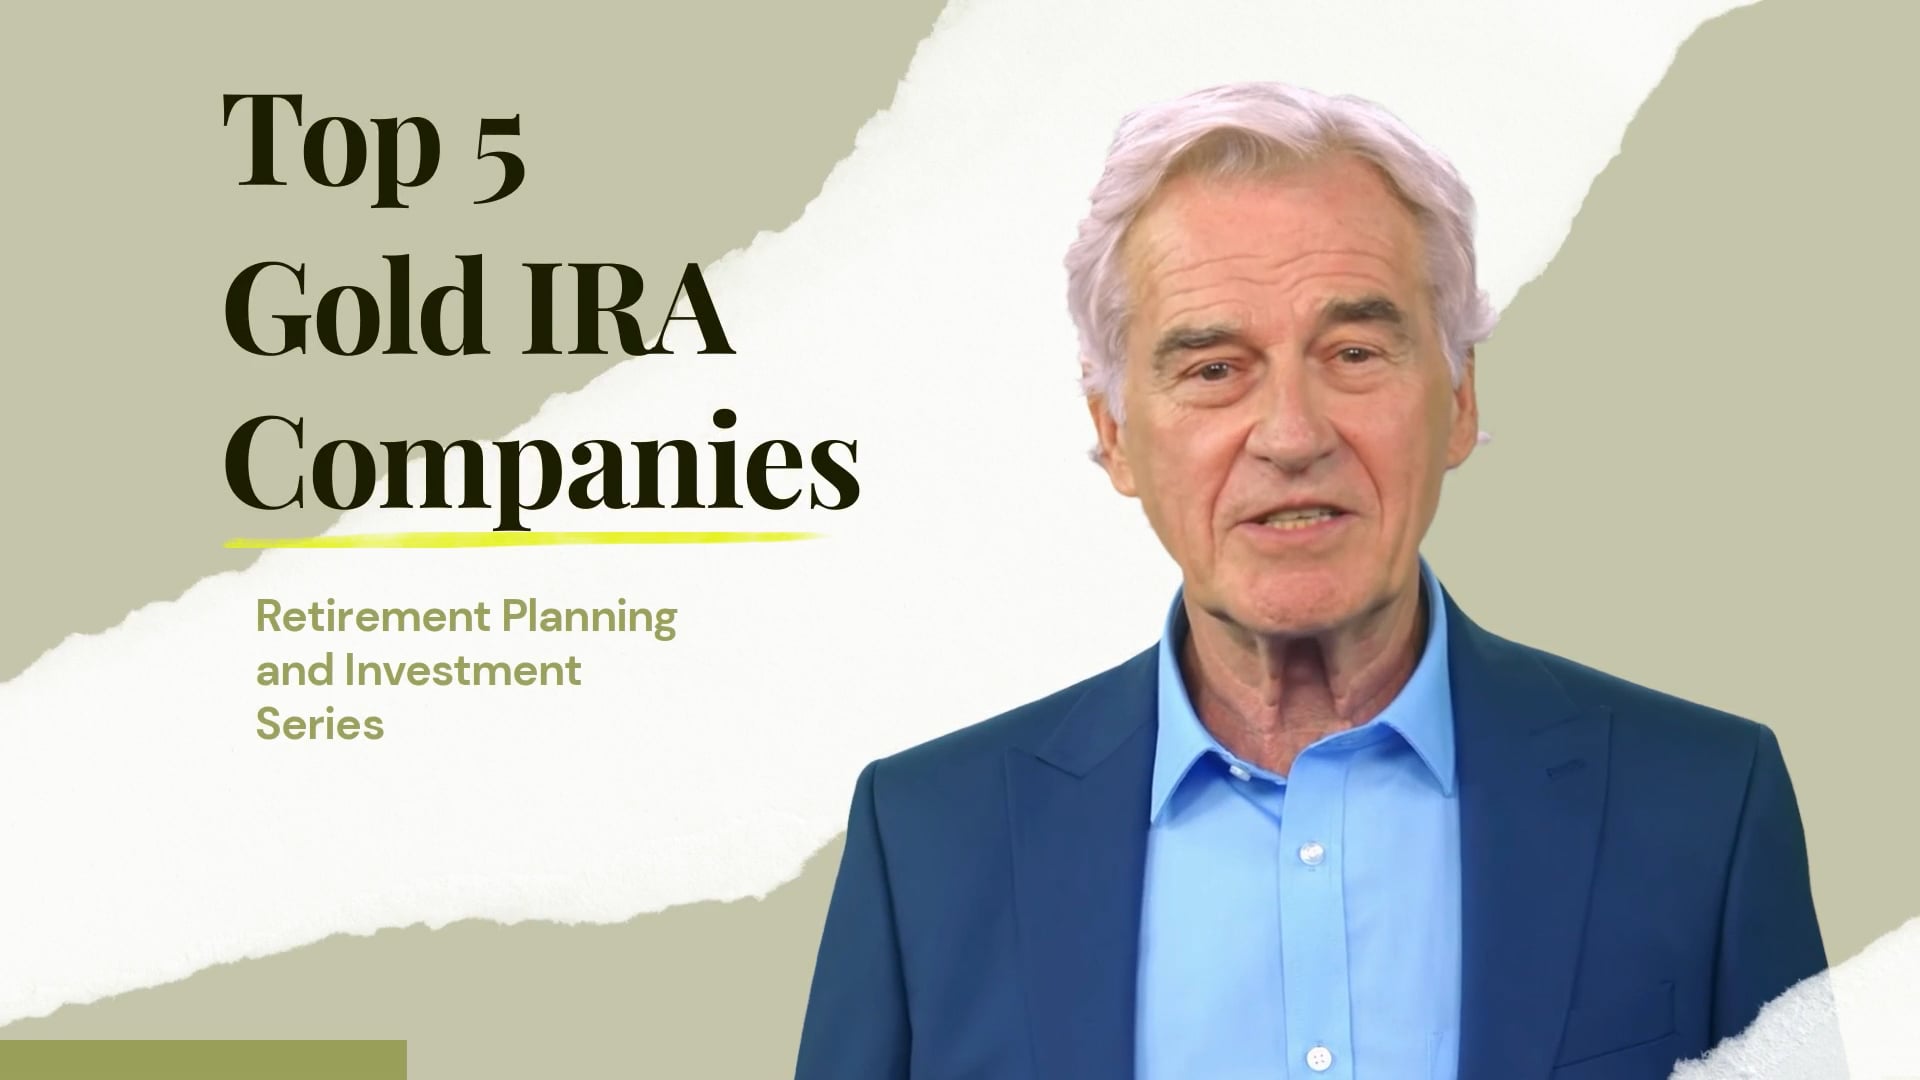 Gold IRA Companies - Top 5 Best Gold IRA Companies 2023 on Vimeo